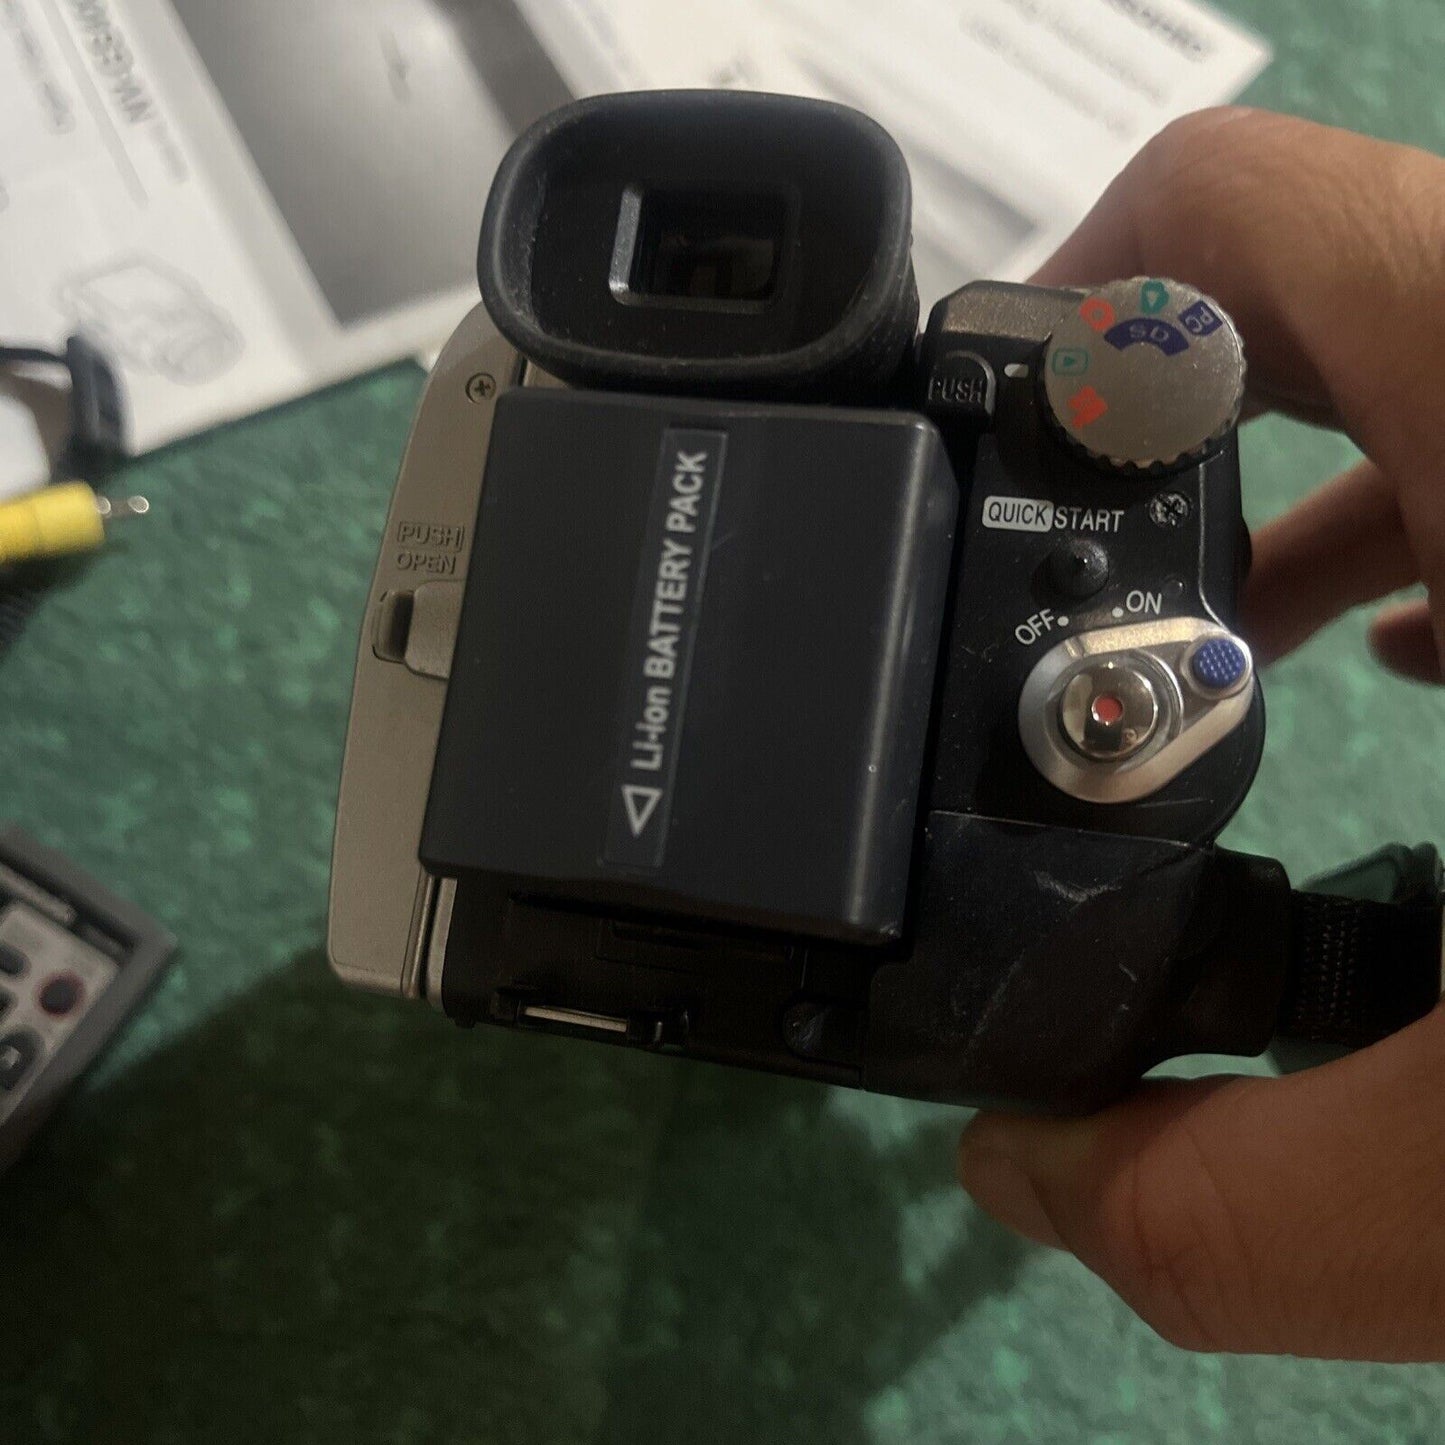 Panasonic NV-GS400 Mini DV Digital Video Camera *works but requires new battery*